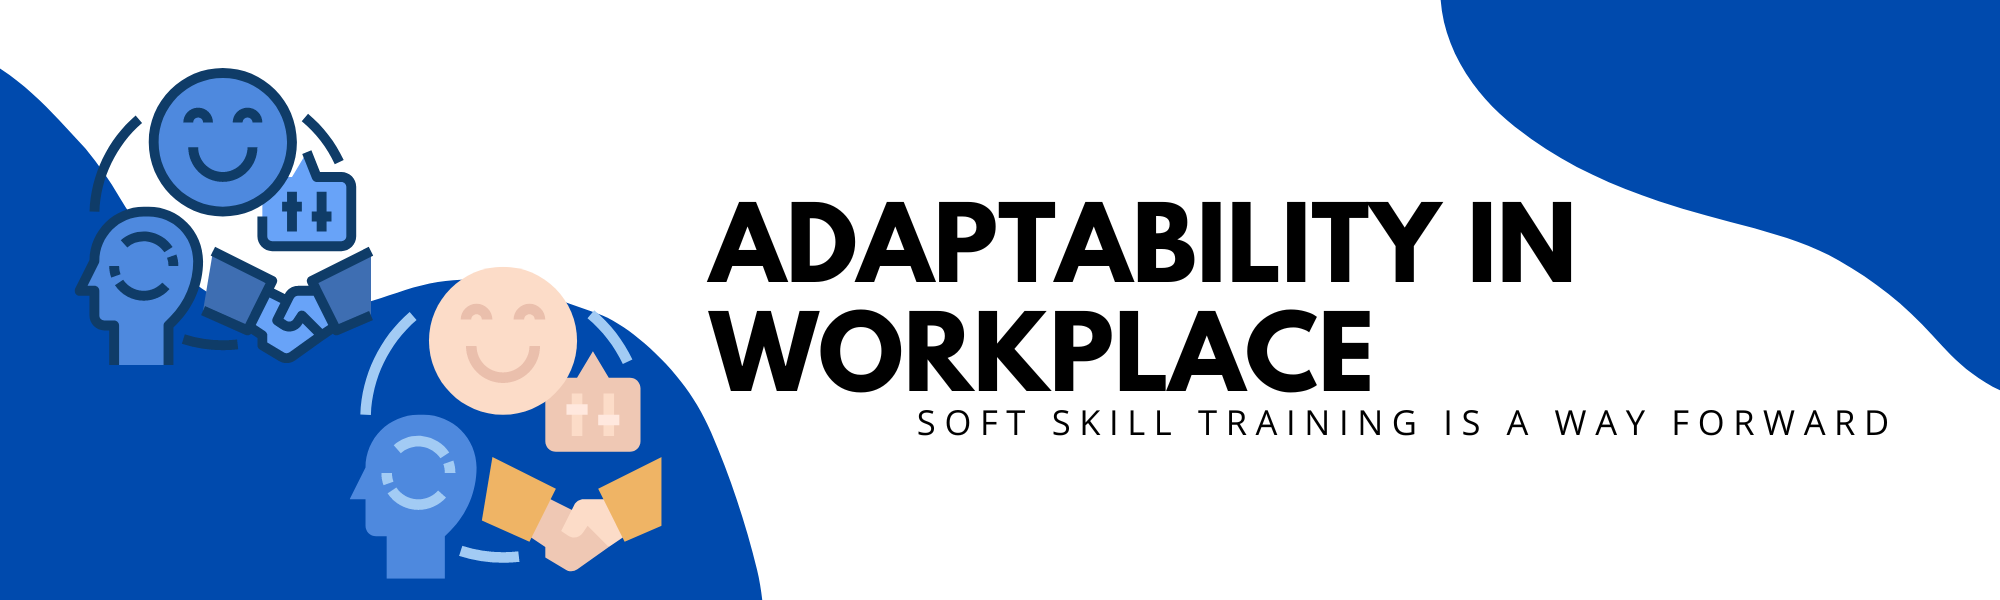 Adaptability in Workplace – Soft Skill Training is a Way Forward